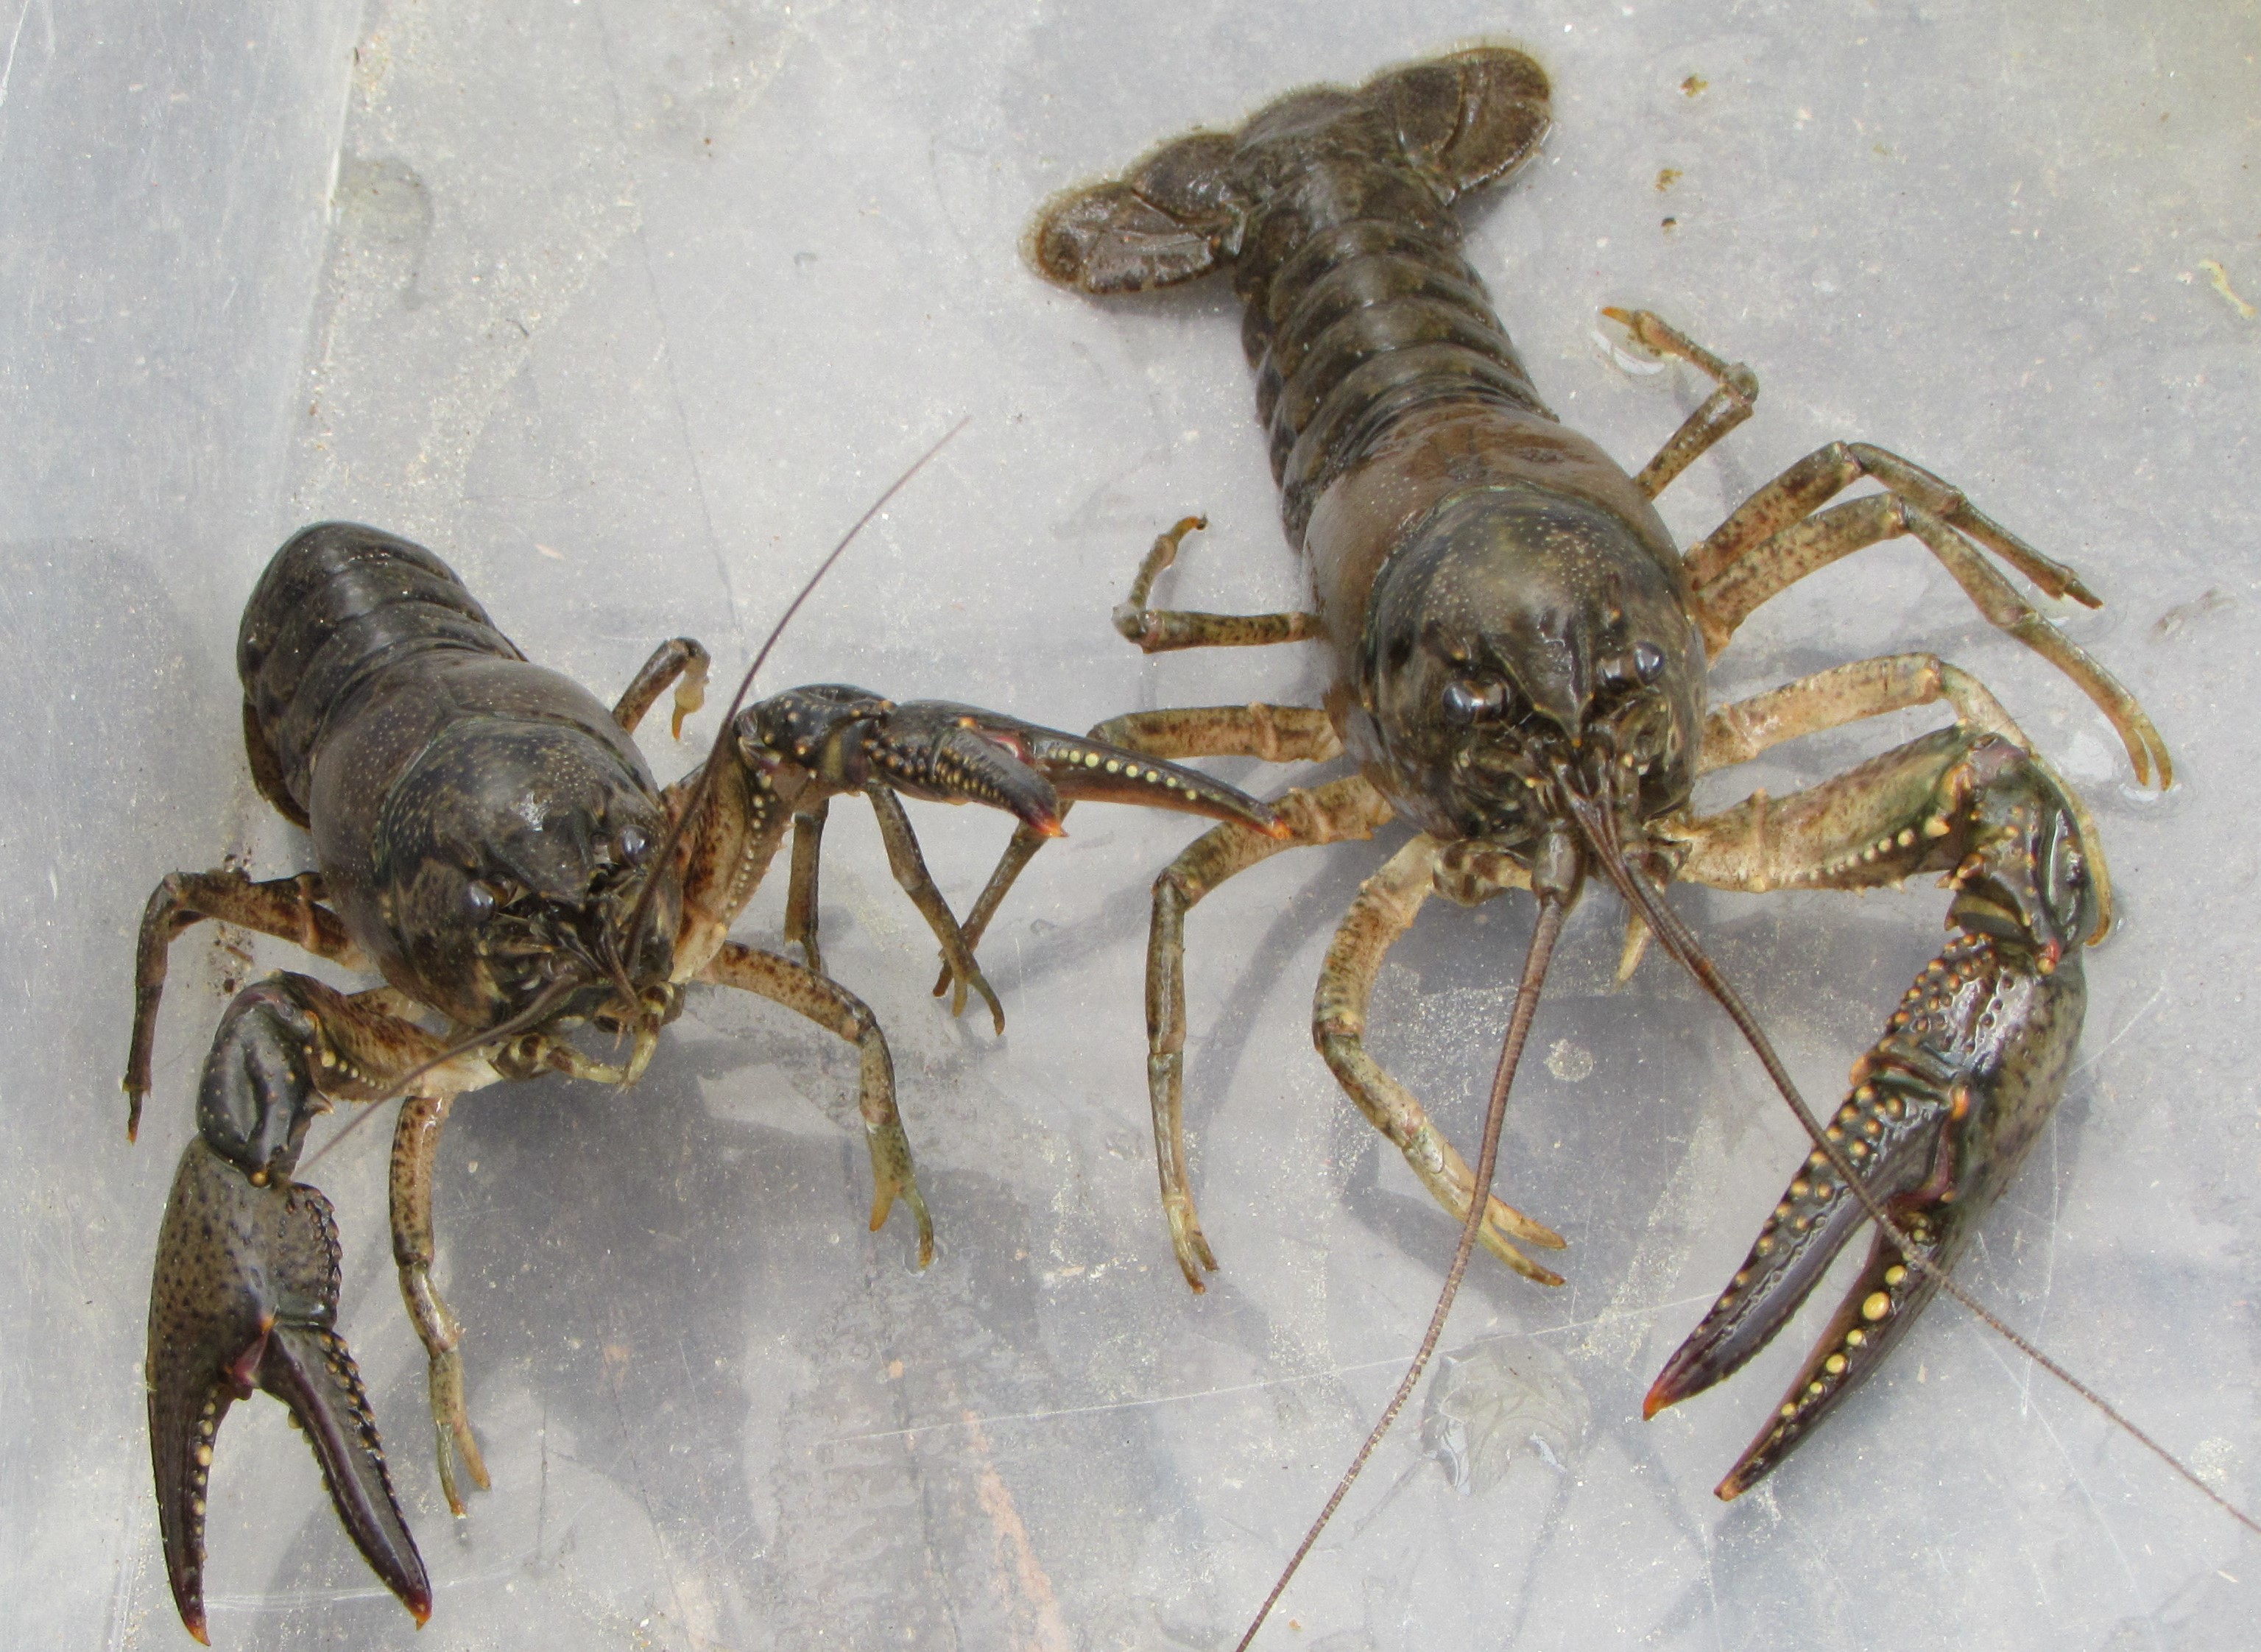 Oregon's sole native crayfish faces new invasive threat - OPB